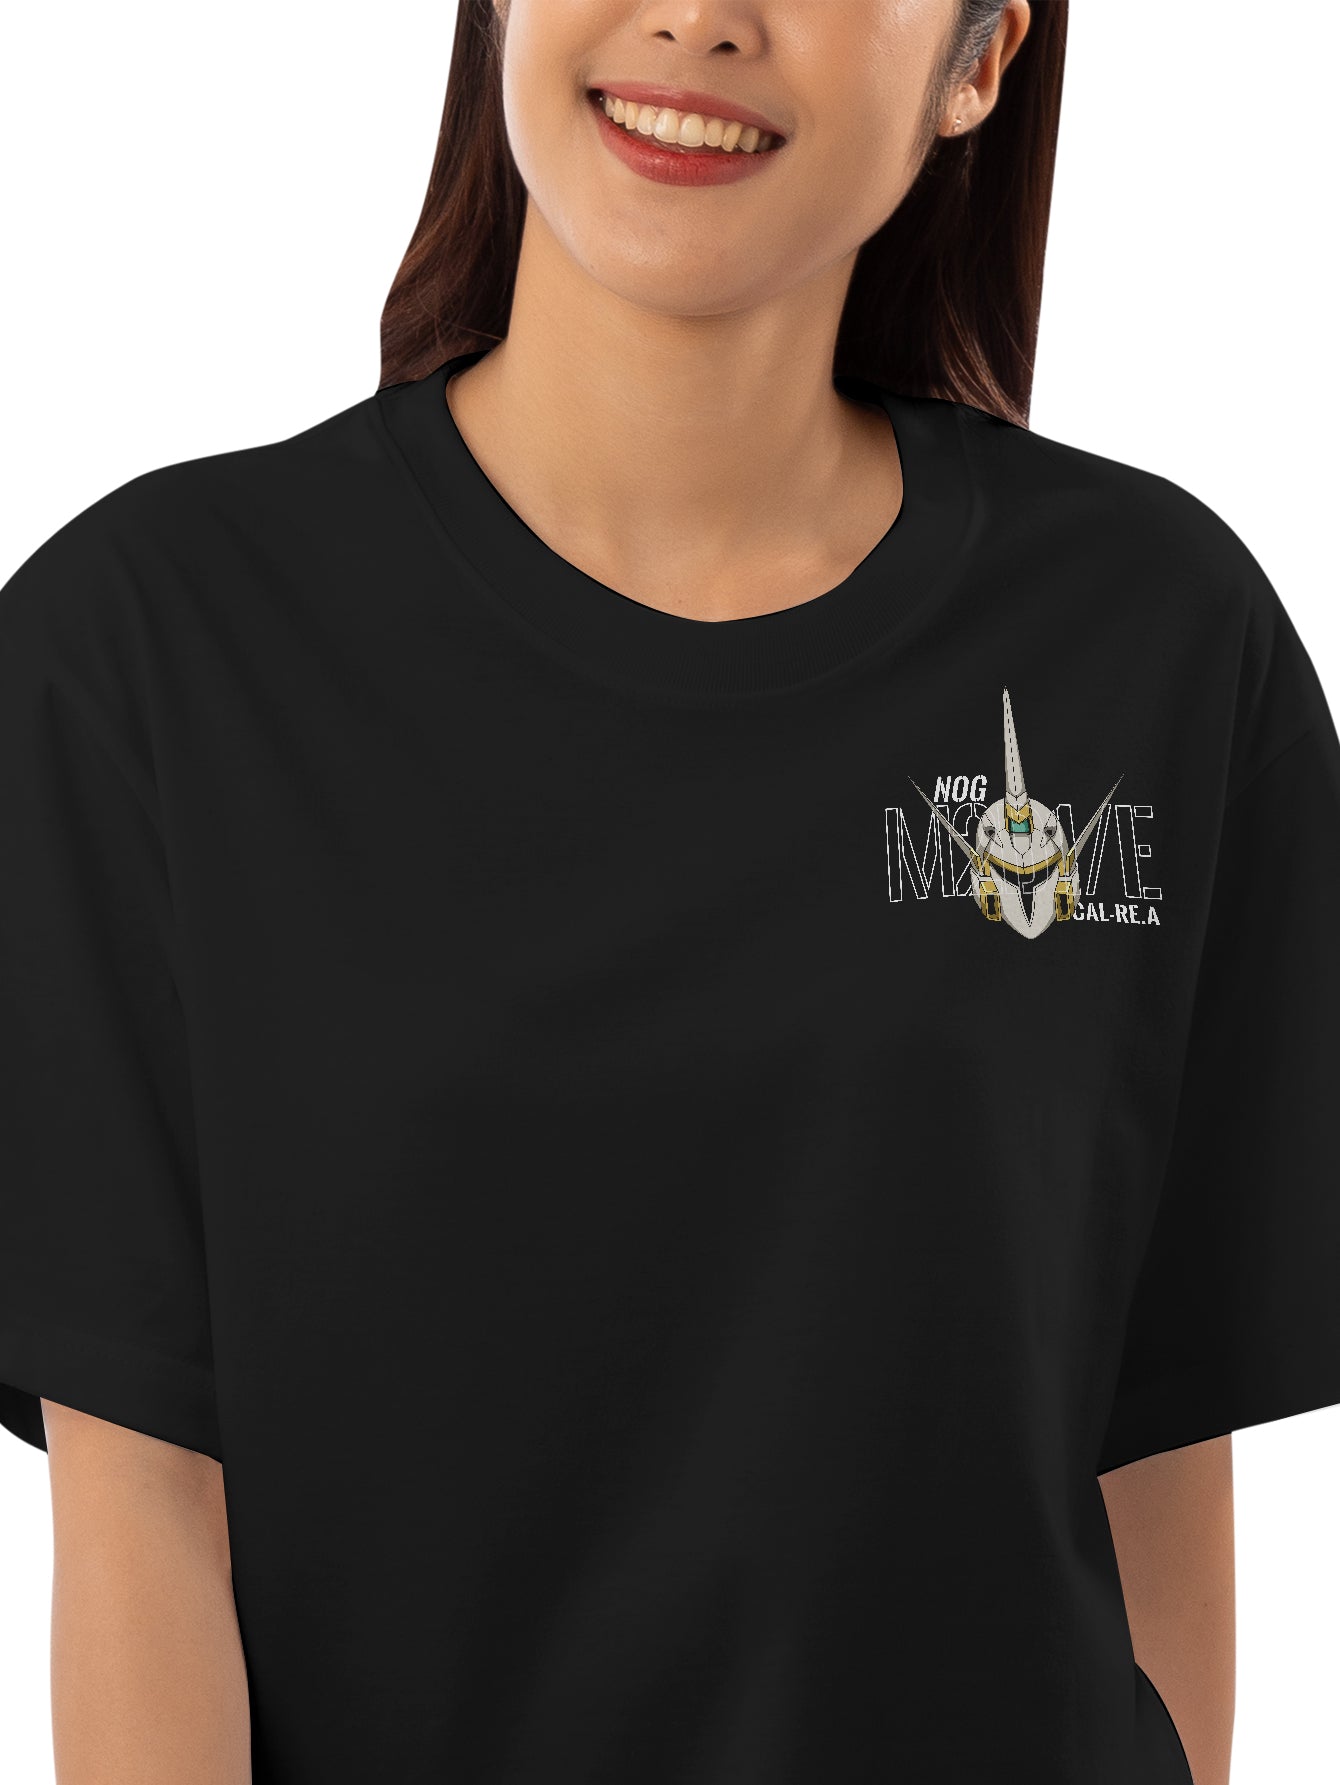 MSG Black Knight Oversize T-Shirt